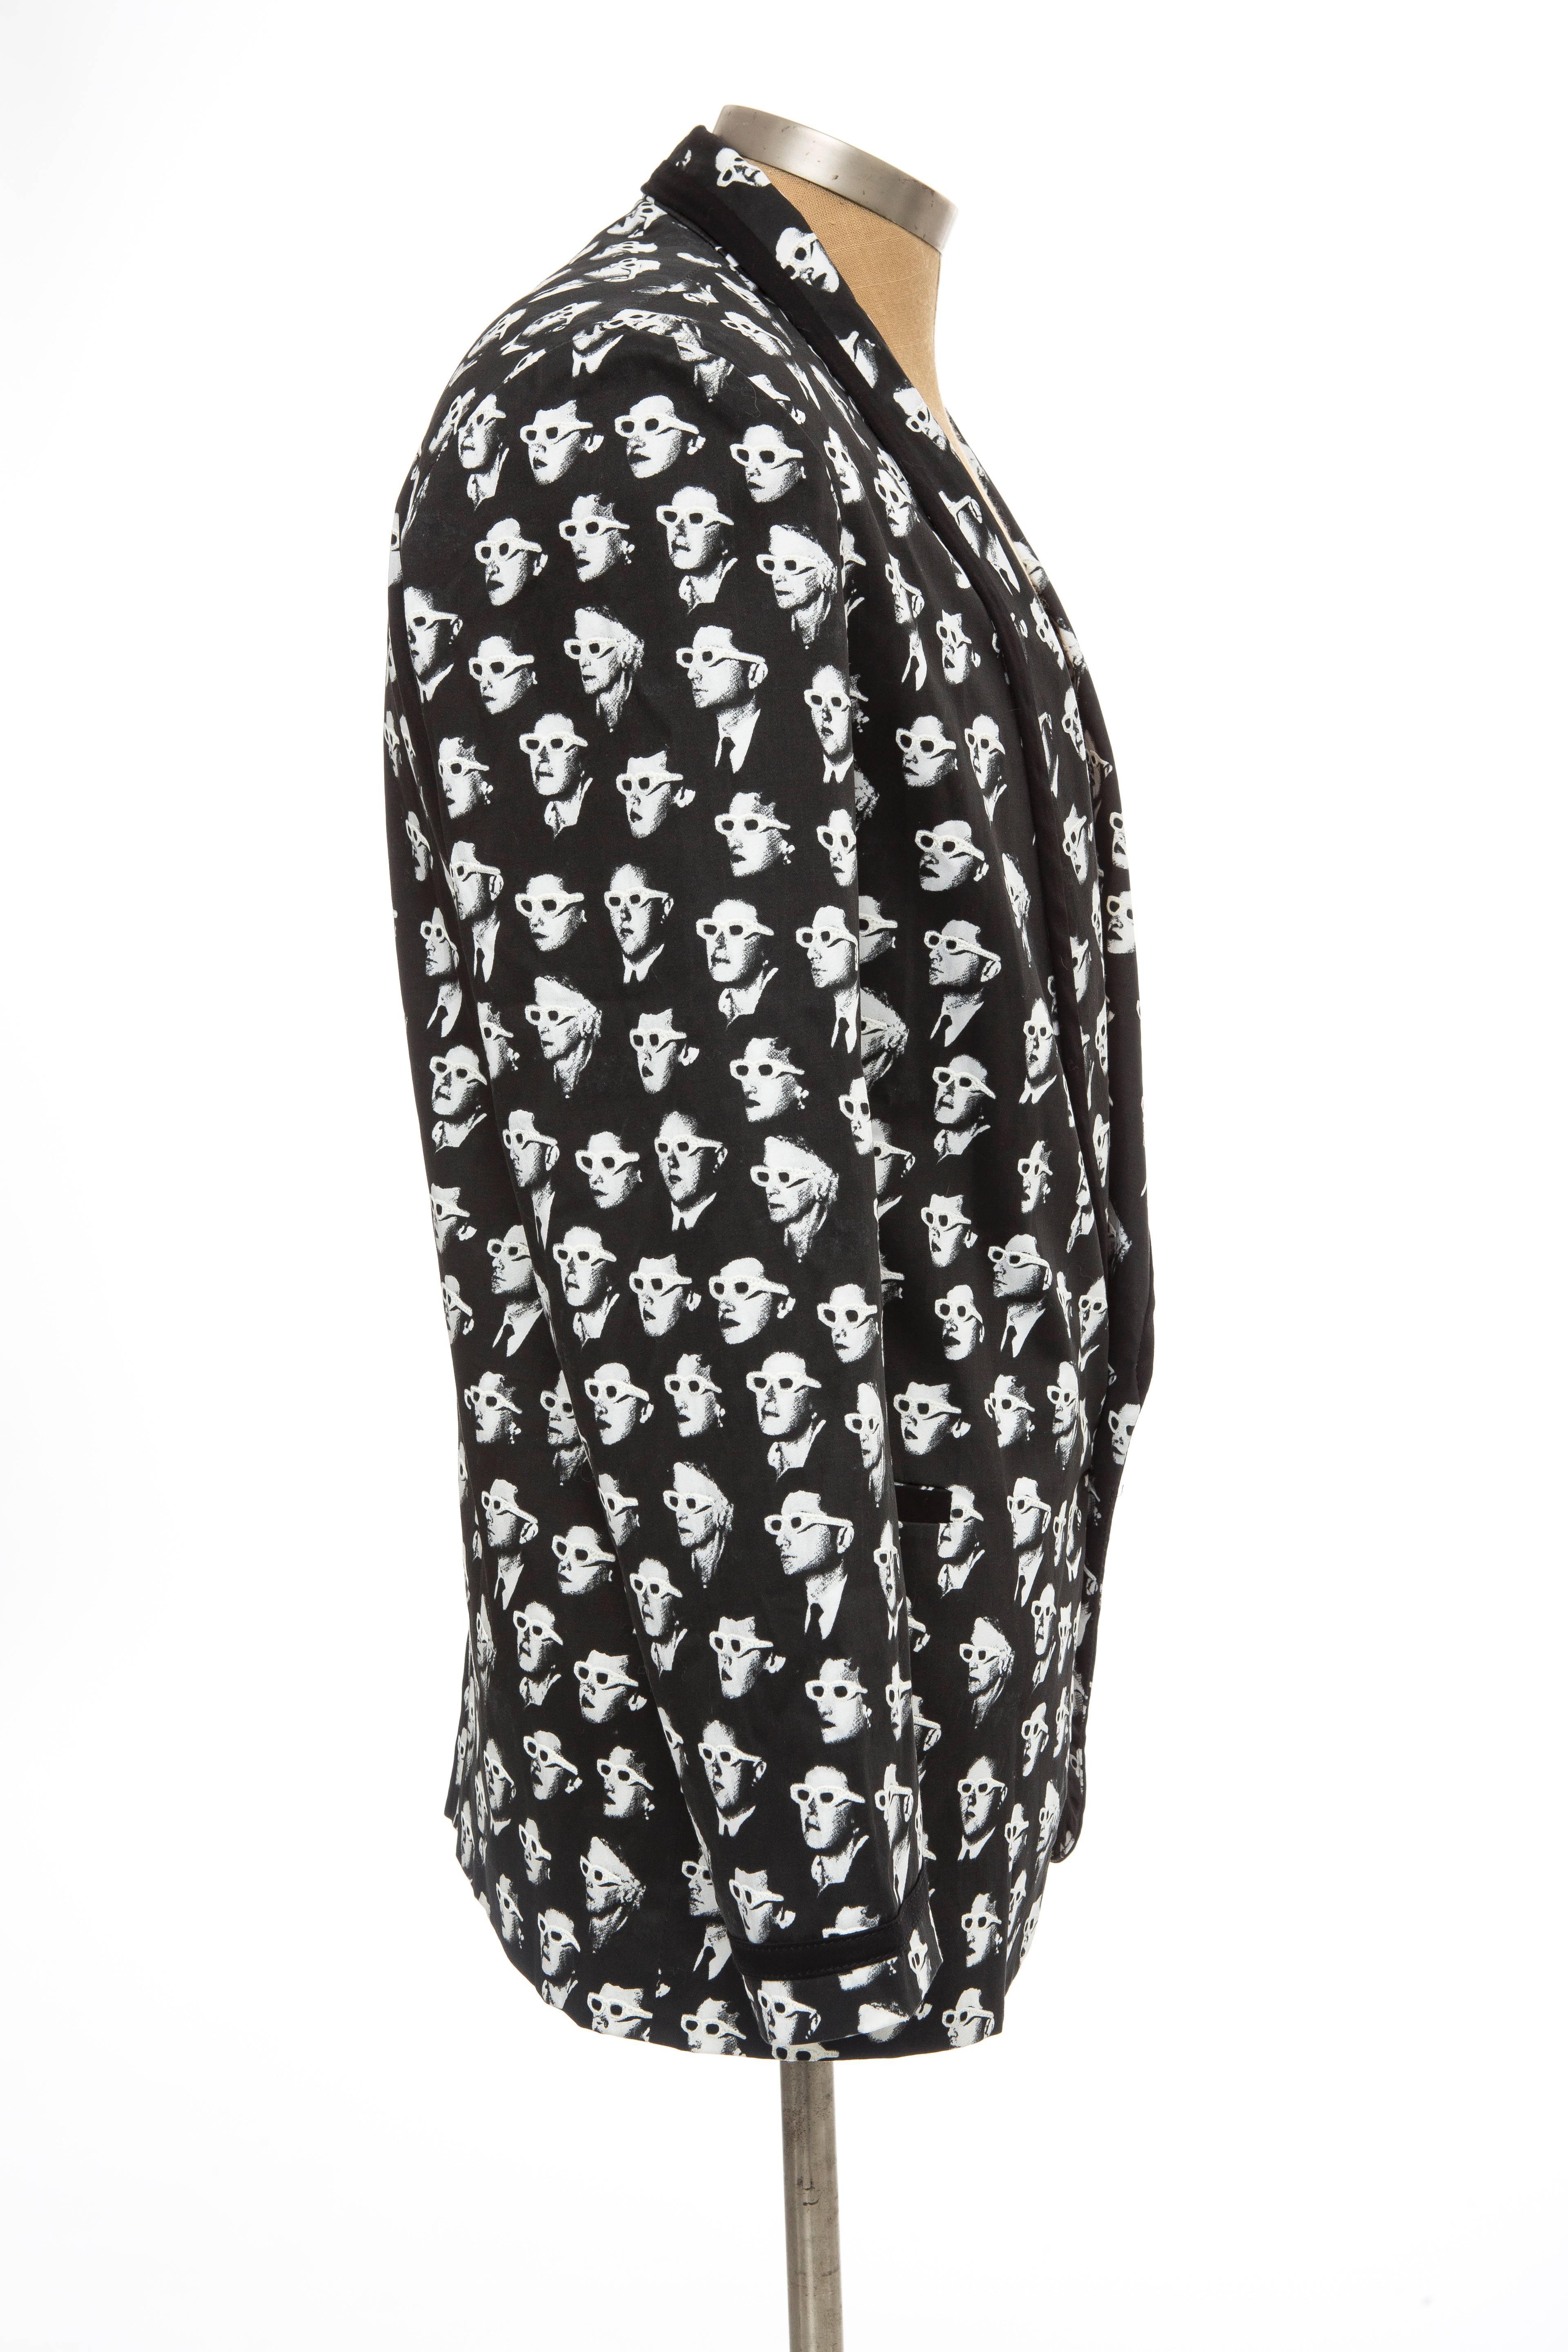 Jeremy Scott Men's Black,Cotton Lycra, Button Front, 3-D Movie Sports Jacket with three front pockets and one interior pocket.

US: Medium

Chest: 40, Waist: 38, Sleeve 24, Shoulder: 17.5, Length: 29